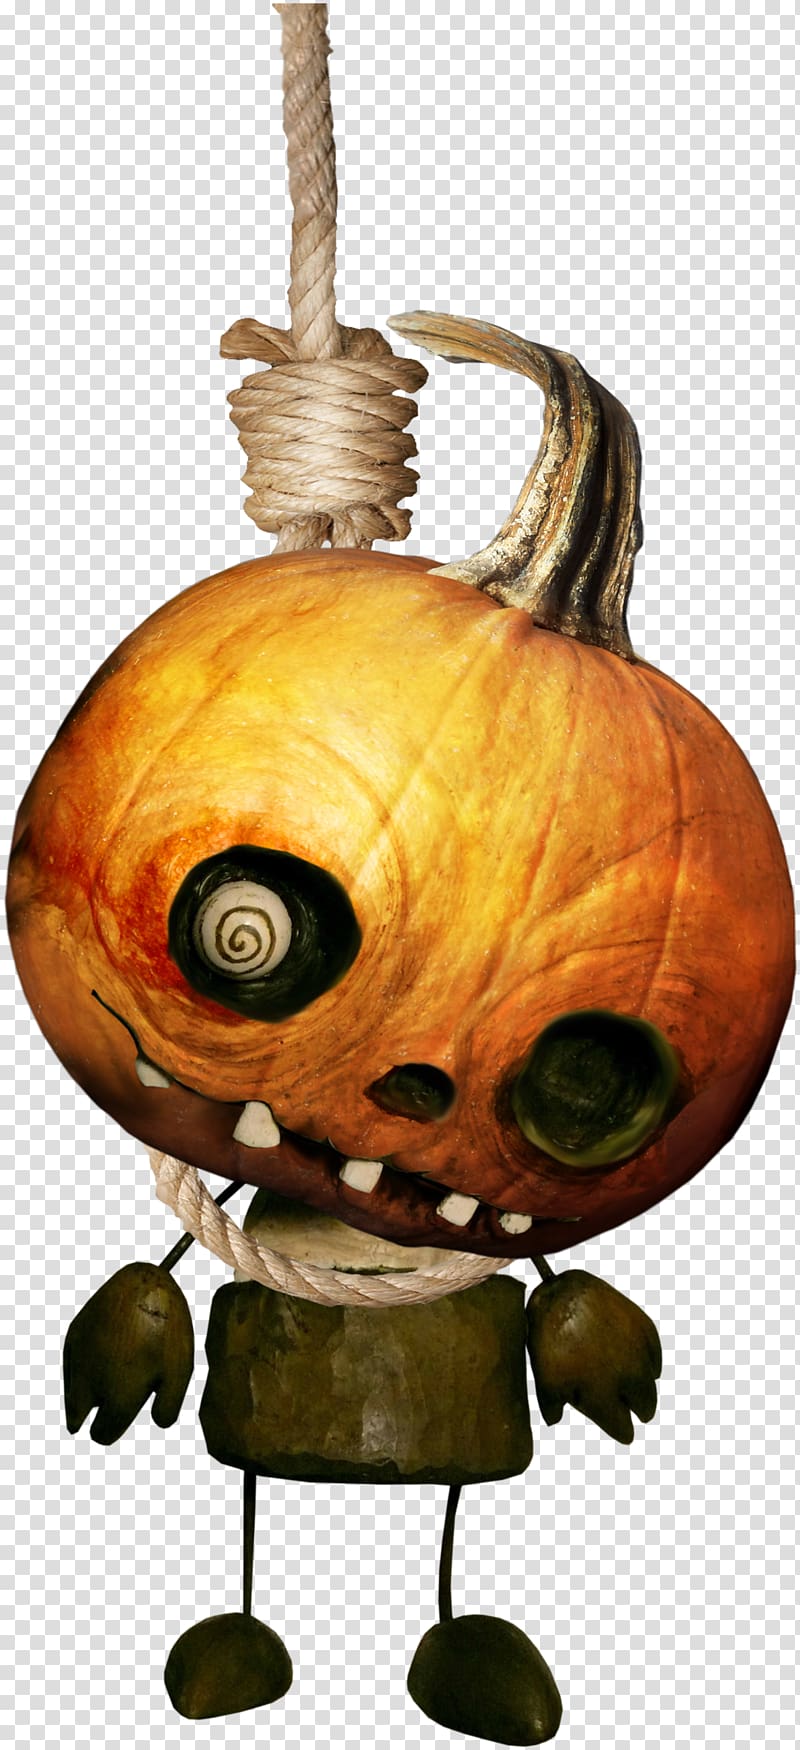 Calabaza Pumpkin Jack-o\'-lantern Kabocha, pumpkin head transparent background PNG clipart